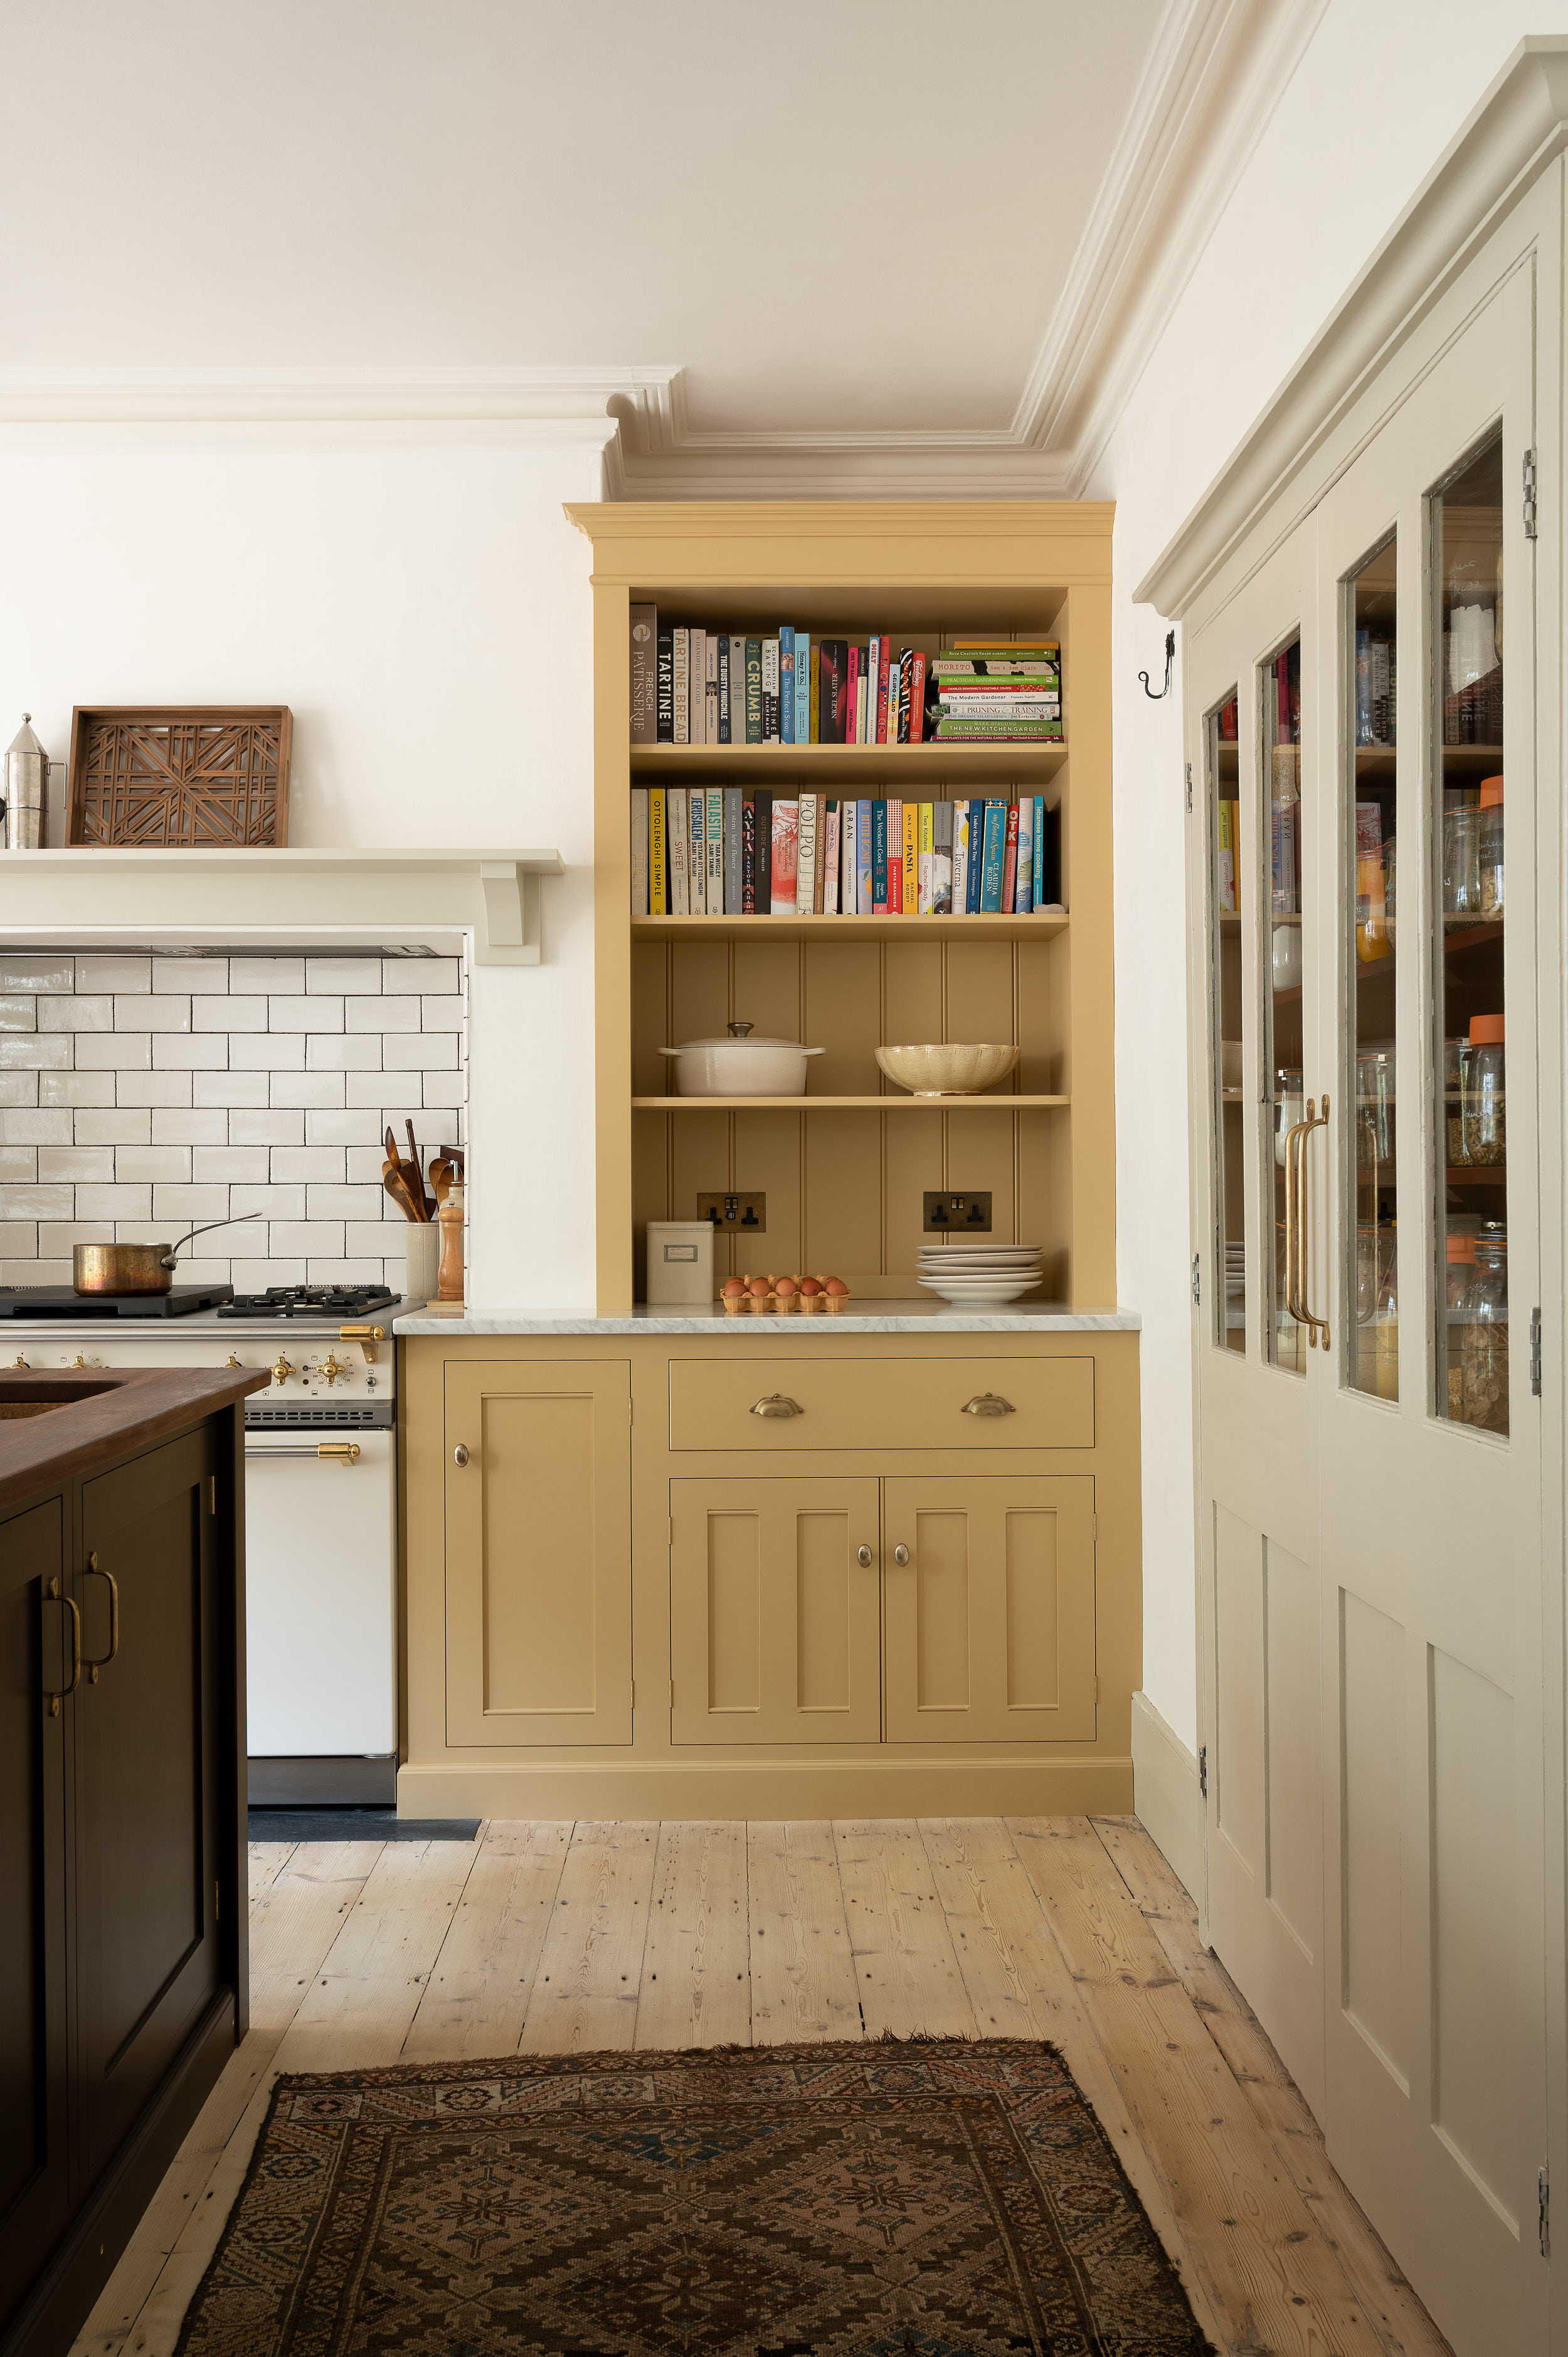 How We Designed The Stoke Newington Kitchen - The deVOL Journal - deVOL ...